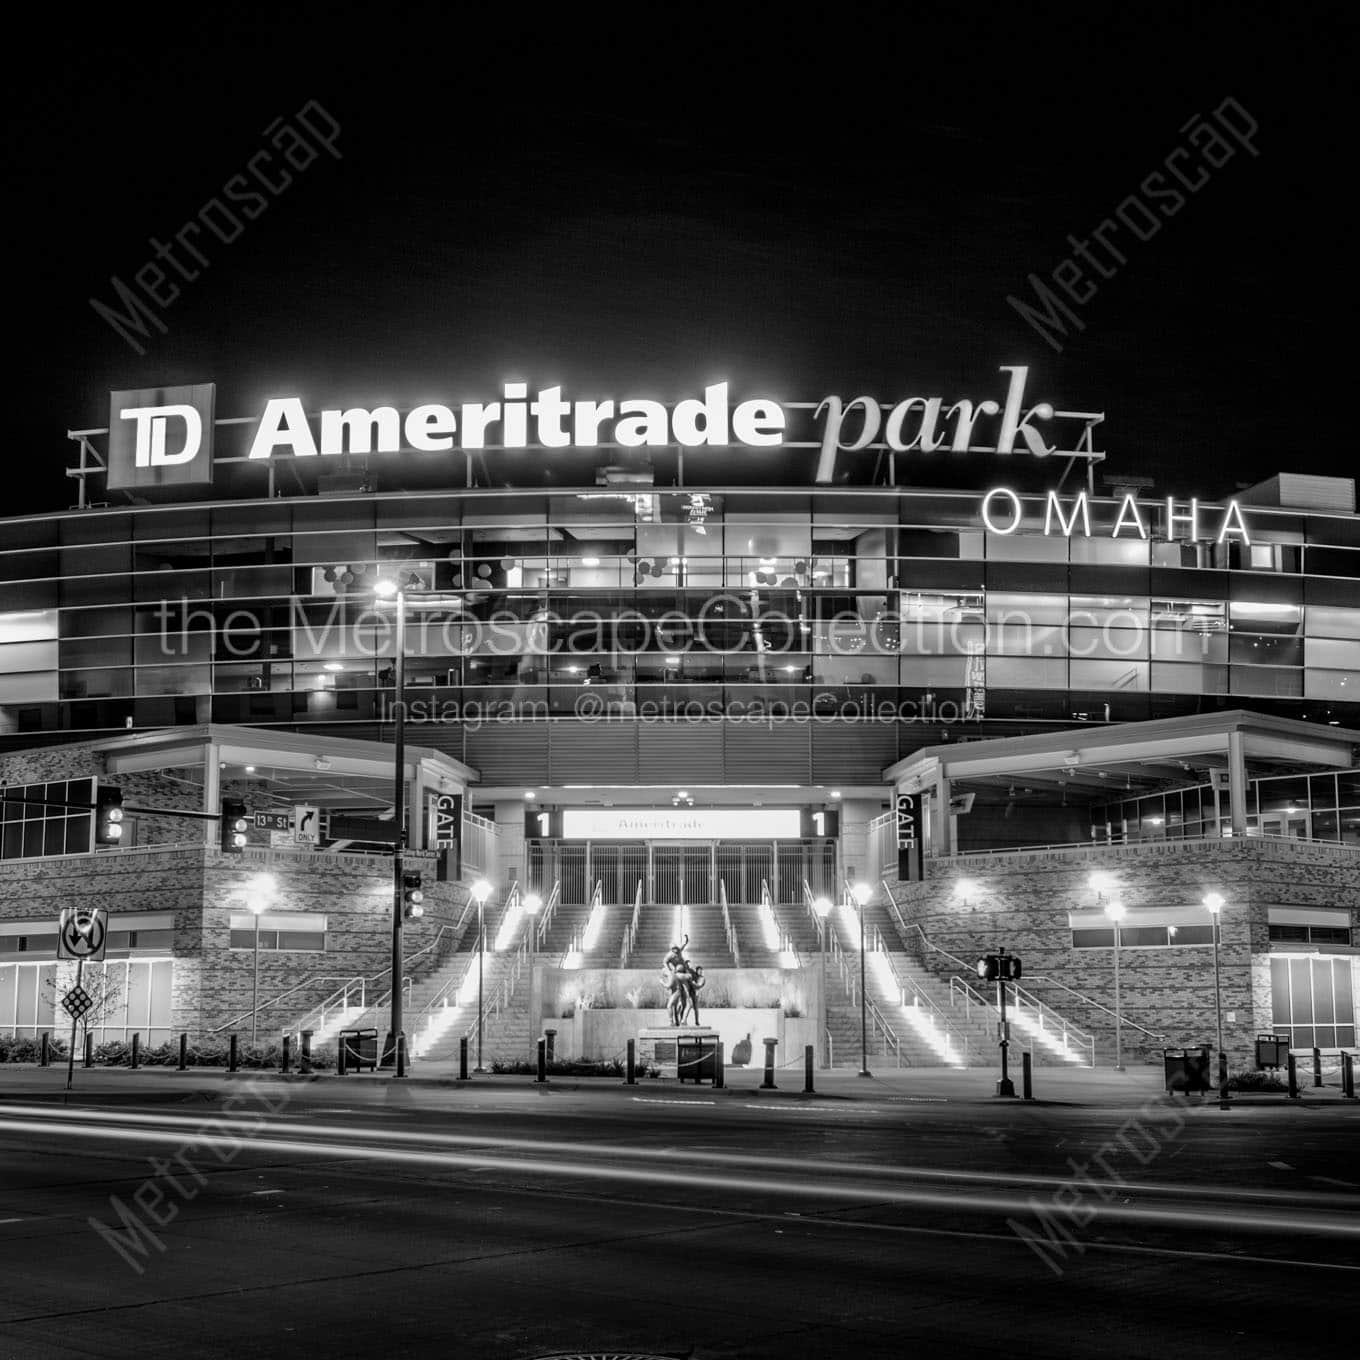 ameritrade stadium at night Black & White Wall Art